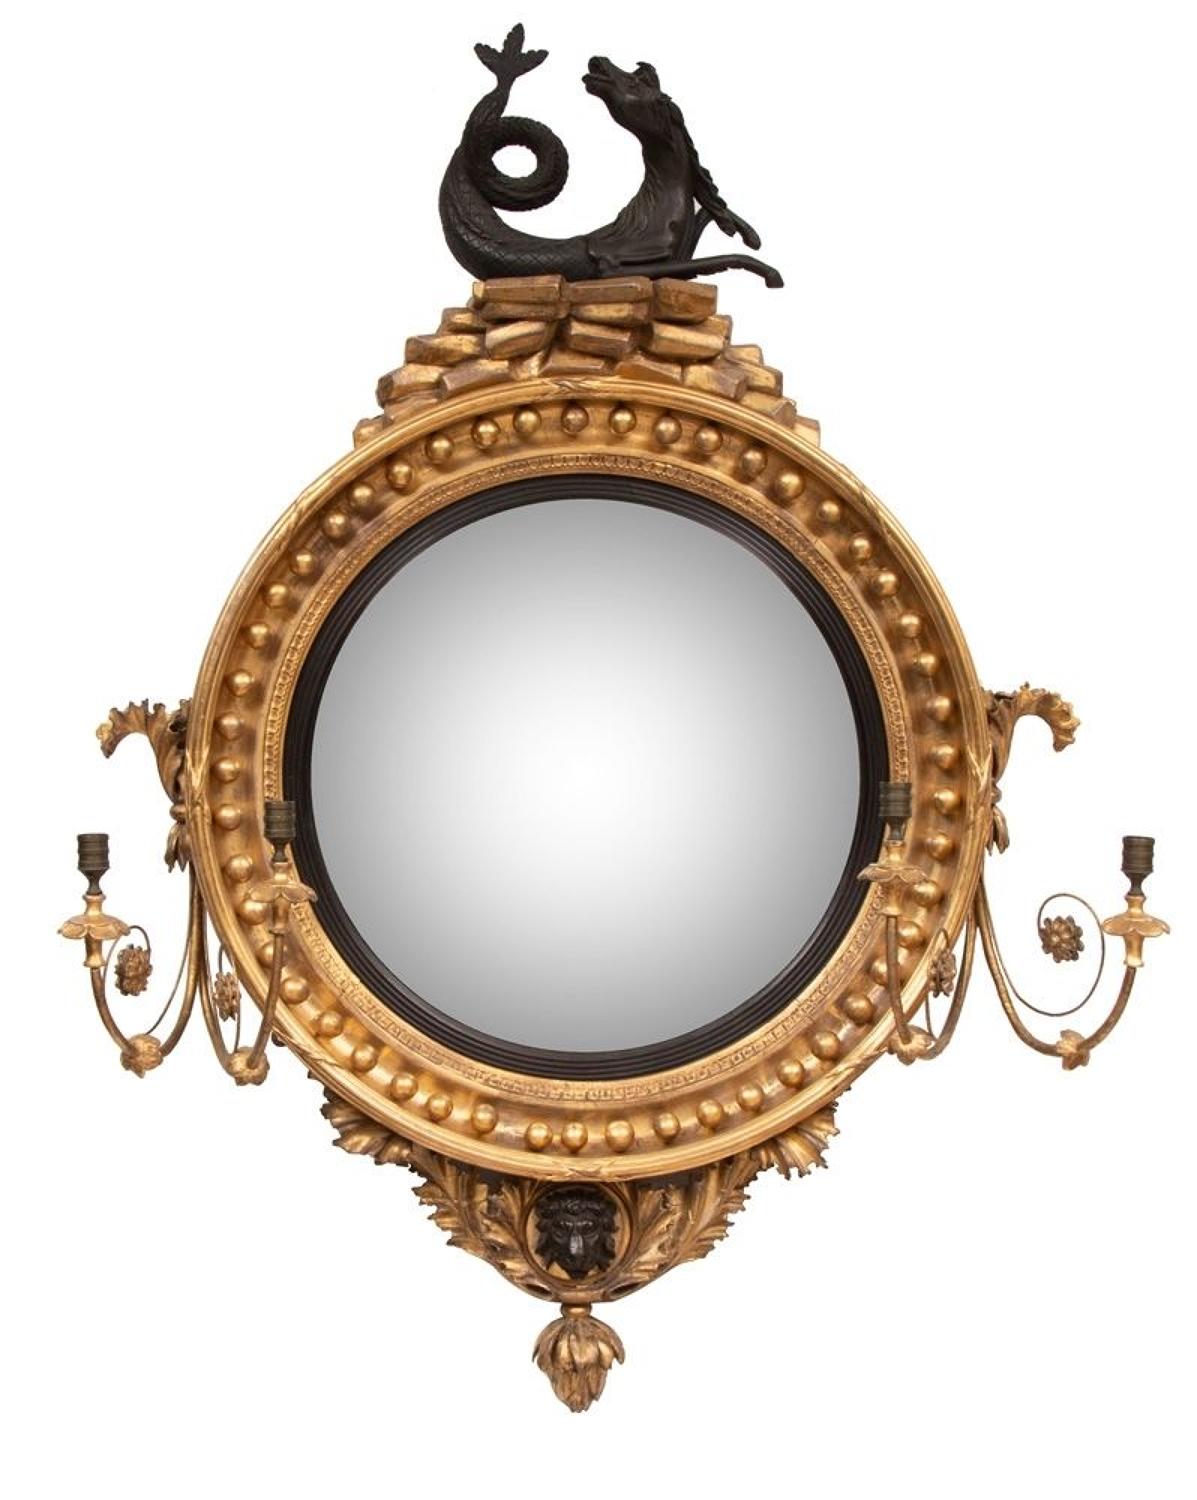 Antique Regency Hippocamp Convex Mirror with Gilded Frame